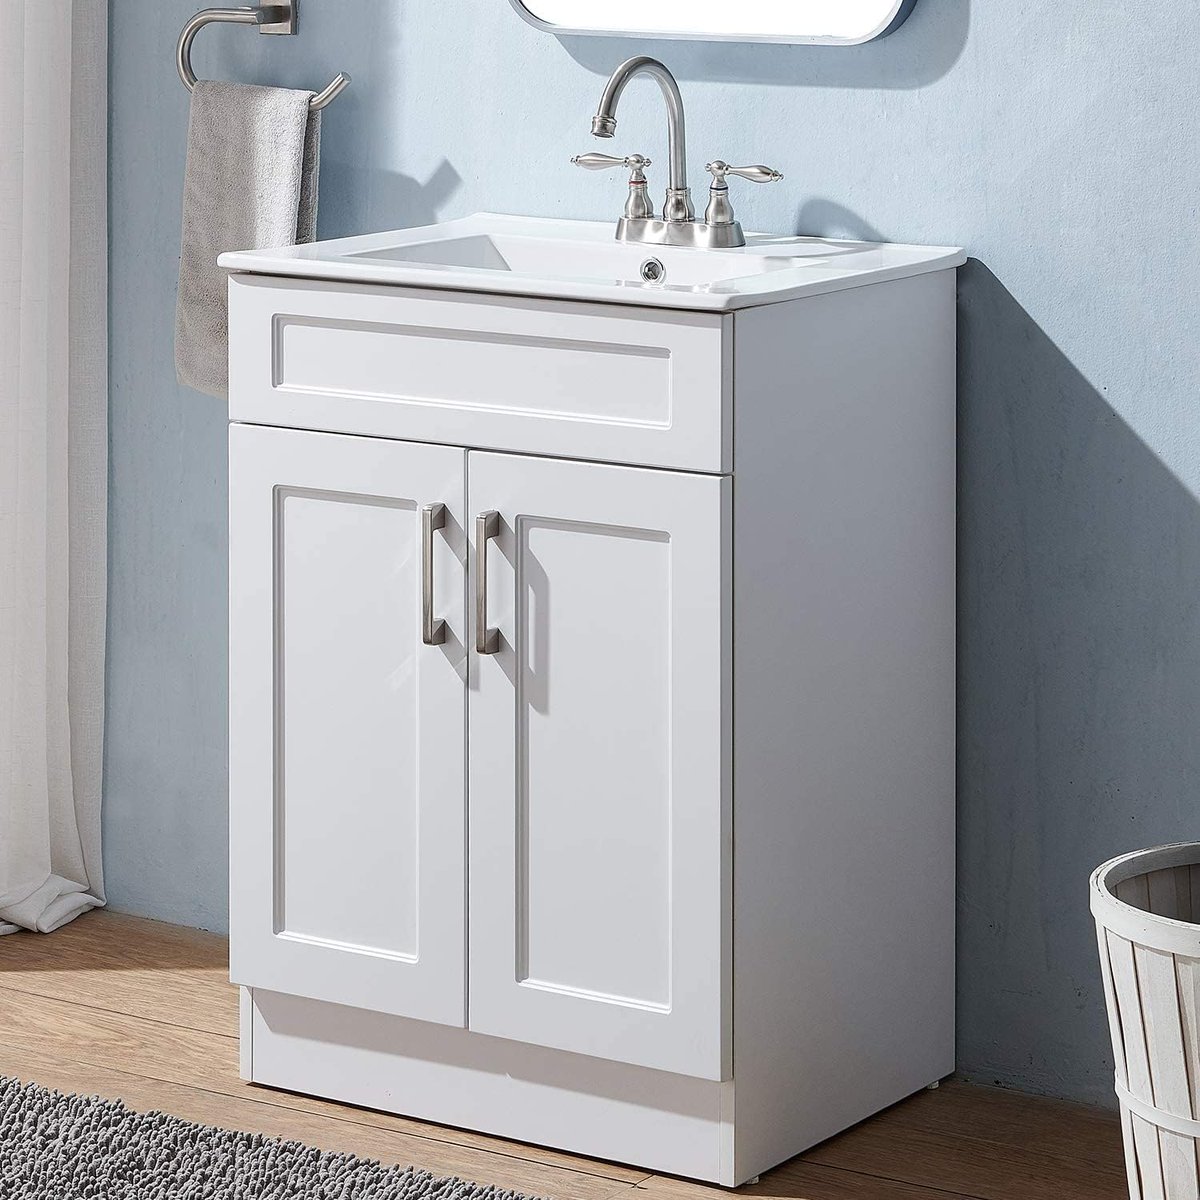 30 Best 16 X 24 Bathroom Vanity (2023) - Guide Best Picks luxbestreviews.com/16-x-24-bathro… #CompactVanity #SmallSpaceSolution #BathroomDesign #SpaceSavingVanity #FunctionalVanity #CustomVanity #EfficientBathroom #ChicVanity